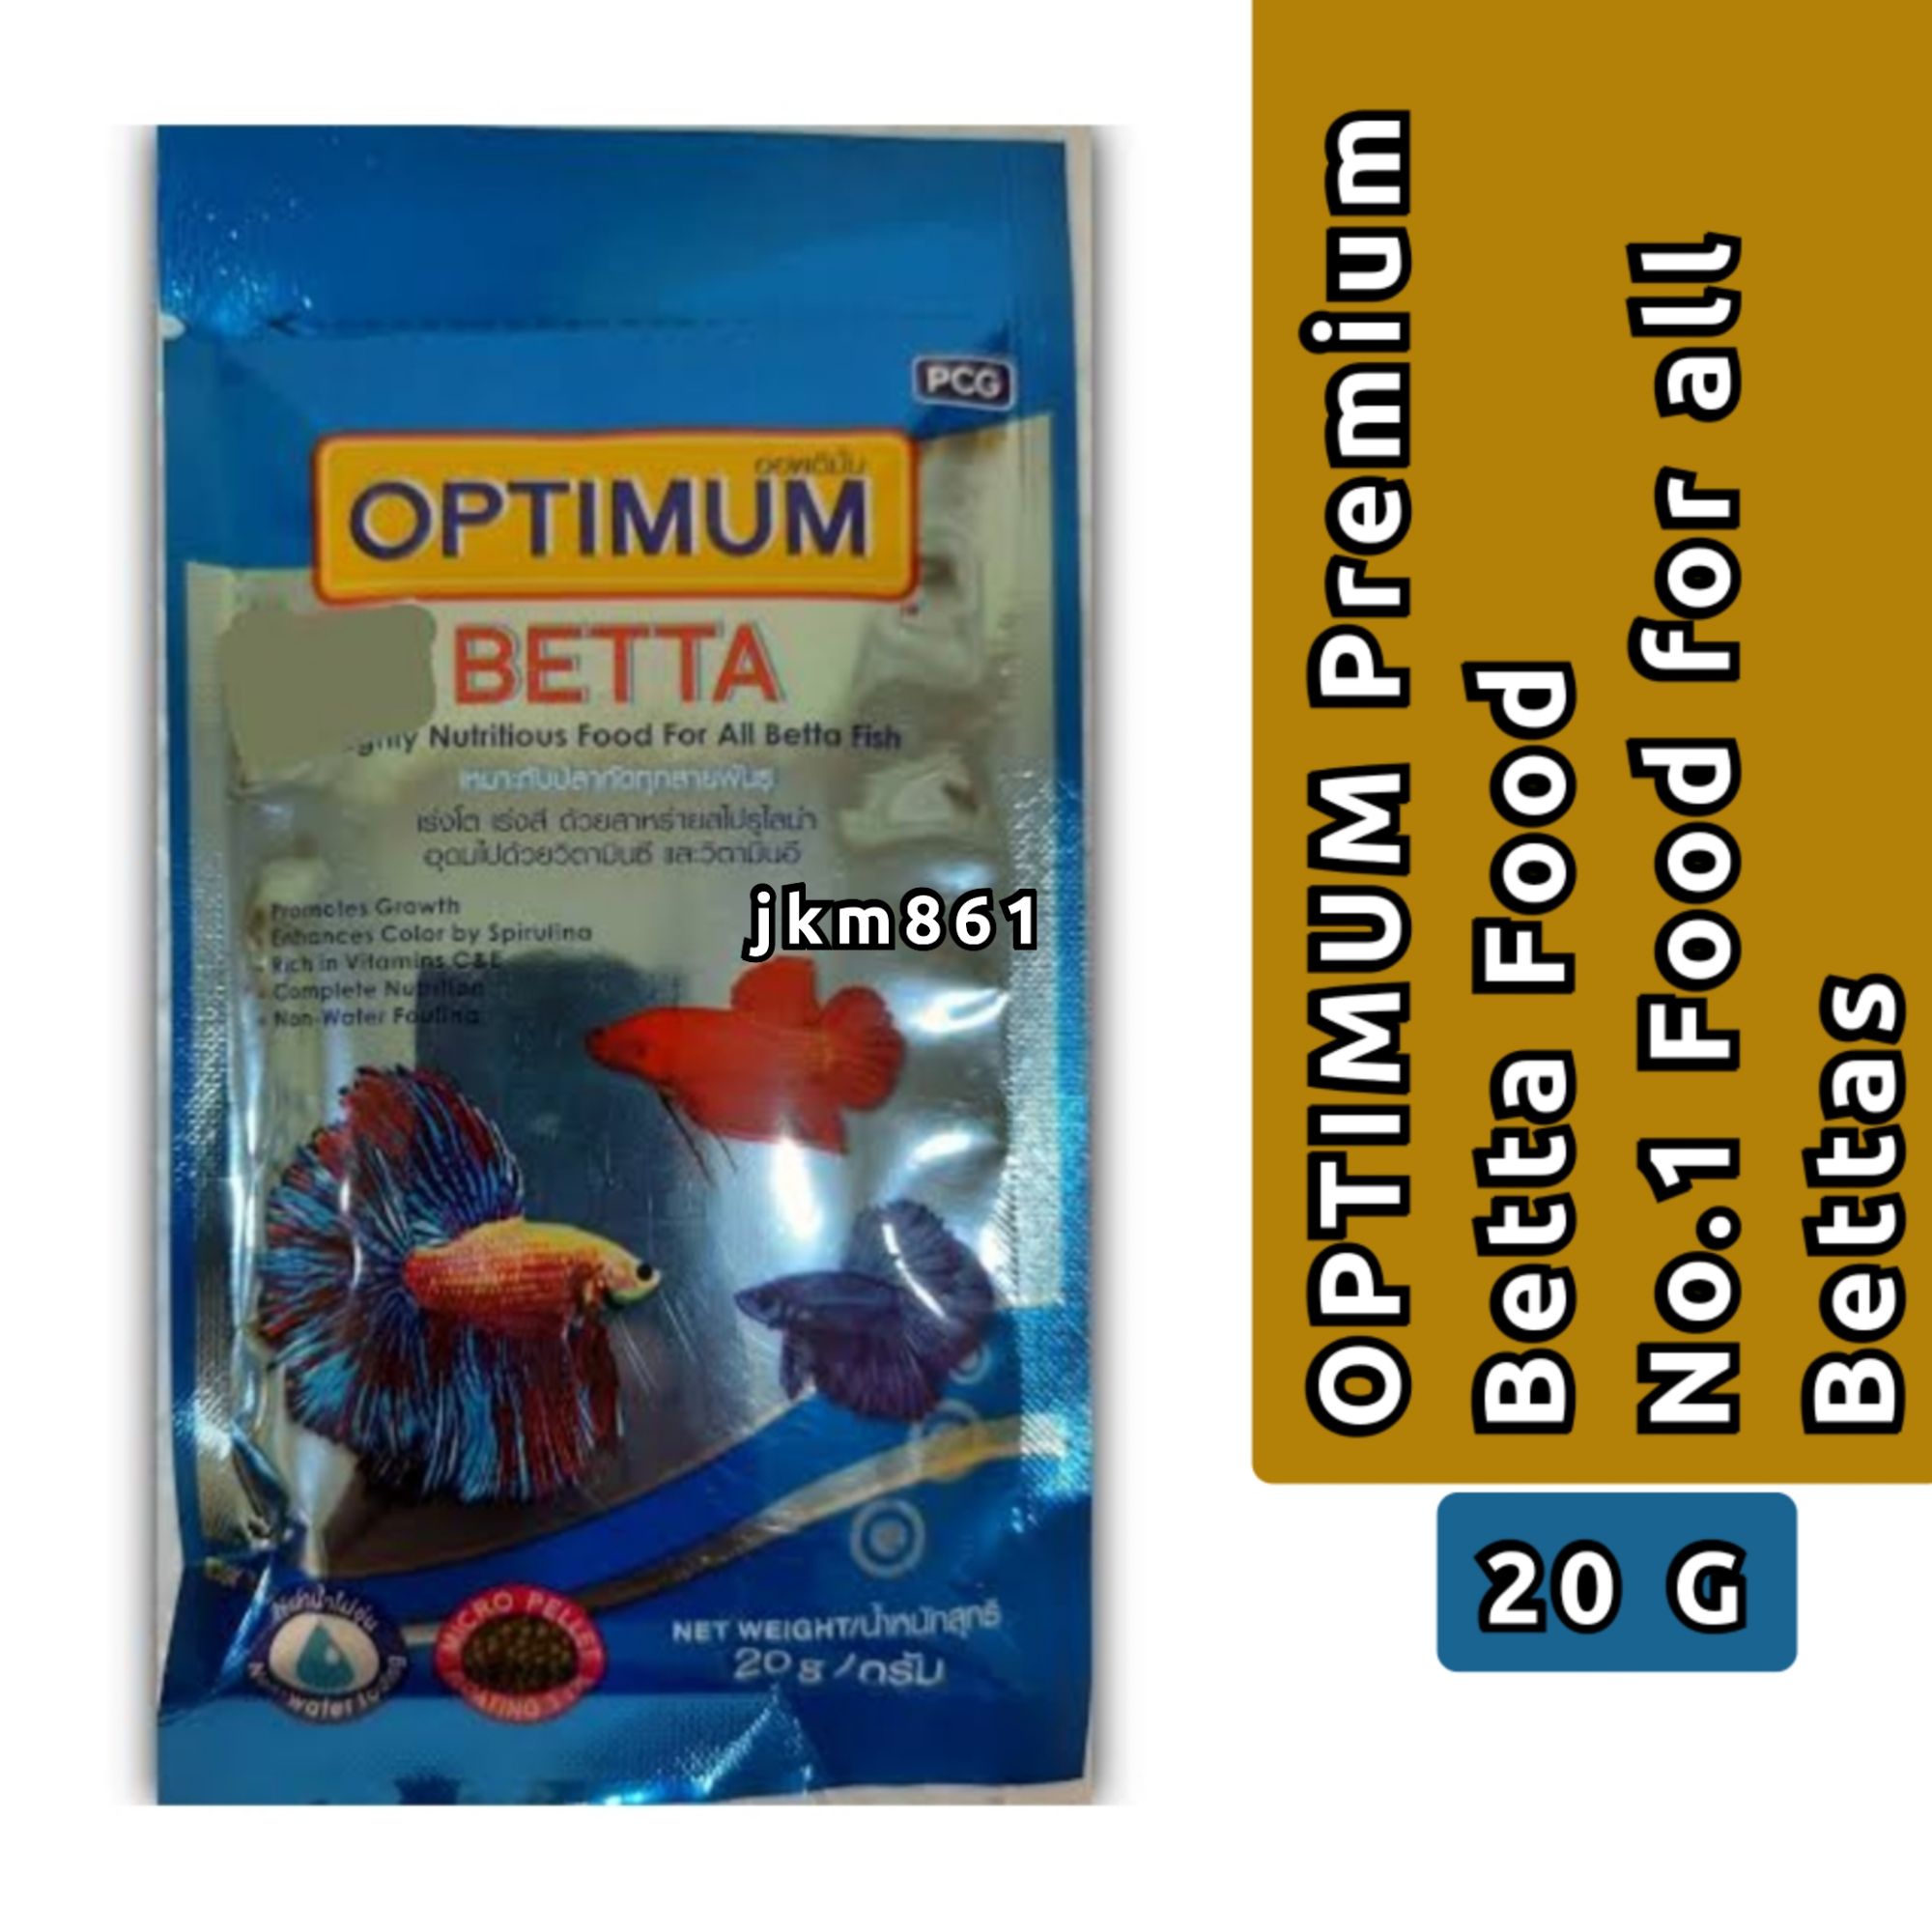 Infinity Betta Fish Food - Spirulina Plus Extract